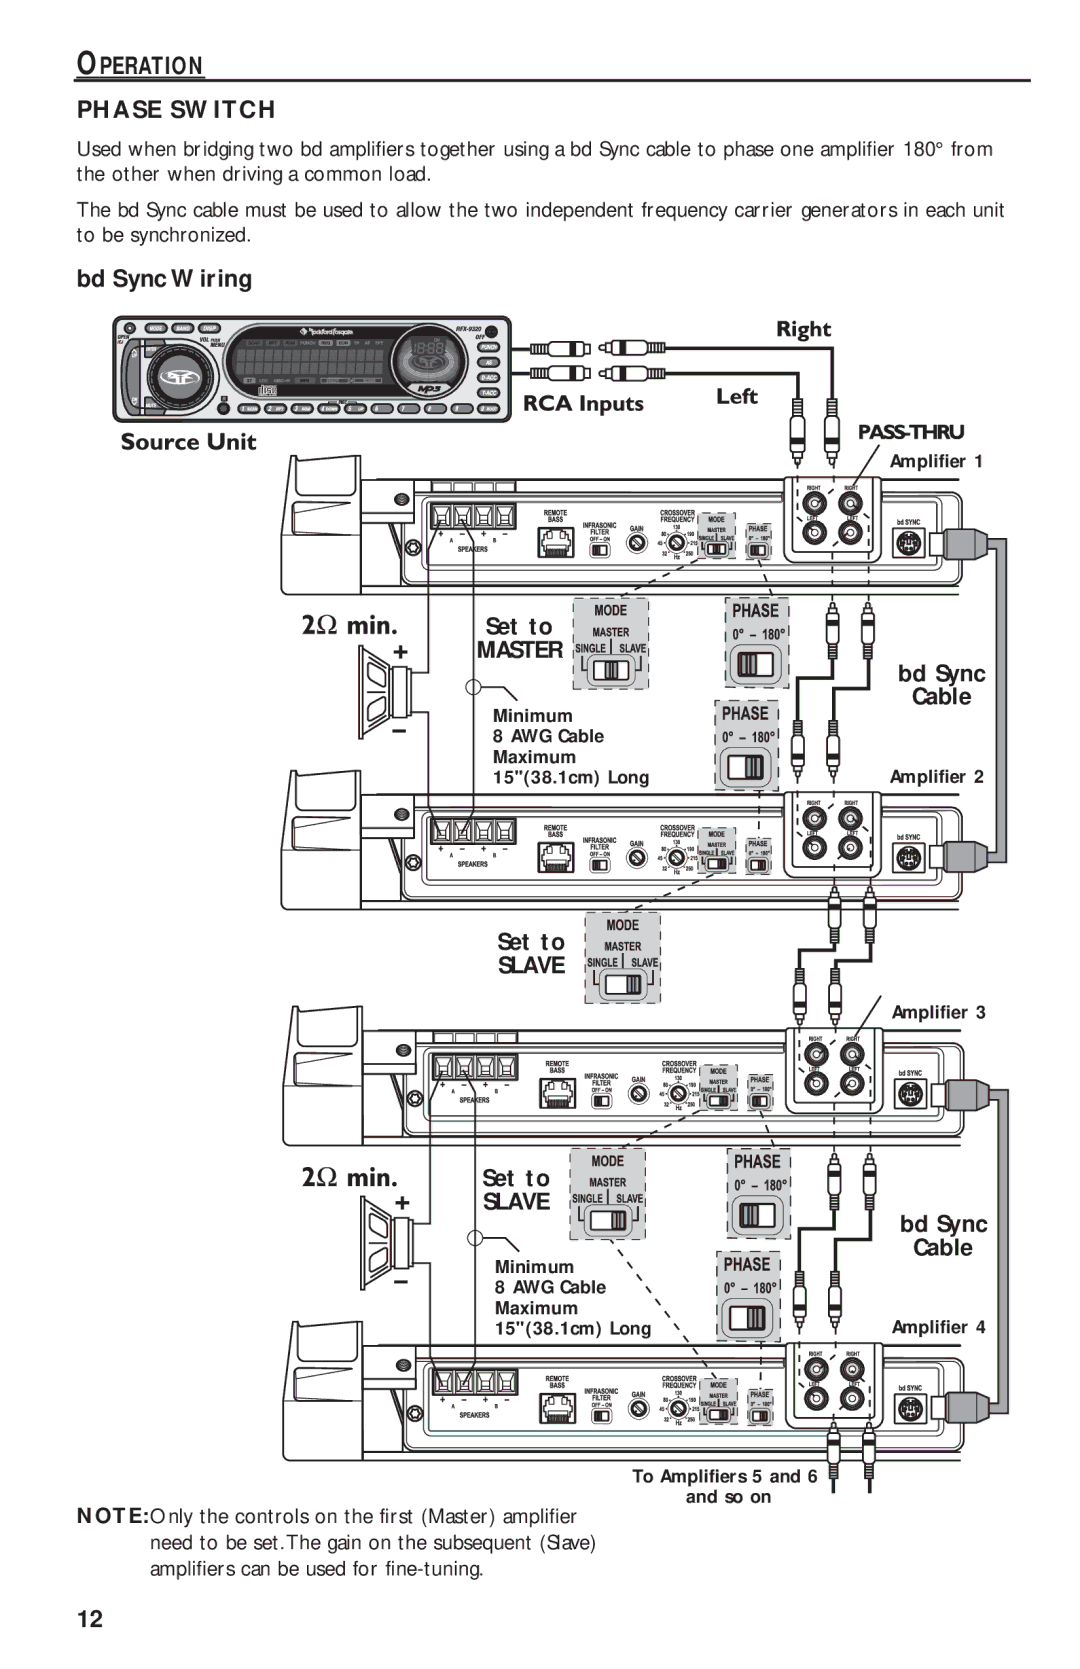 Rockford Fosgate T20001 BD, T30001 BD, T10001 BD manual Operation Phase Switch, Bd Sync Wiring 